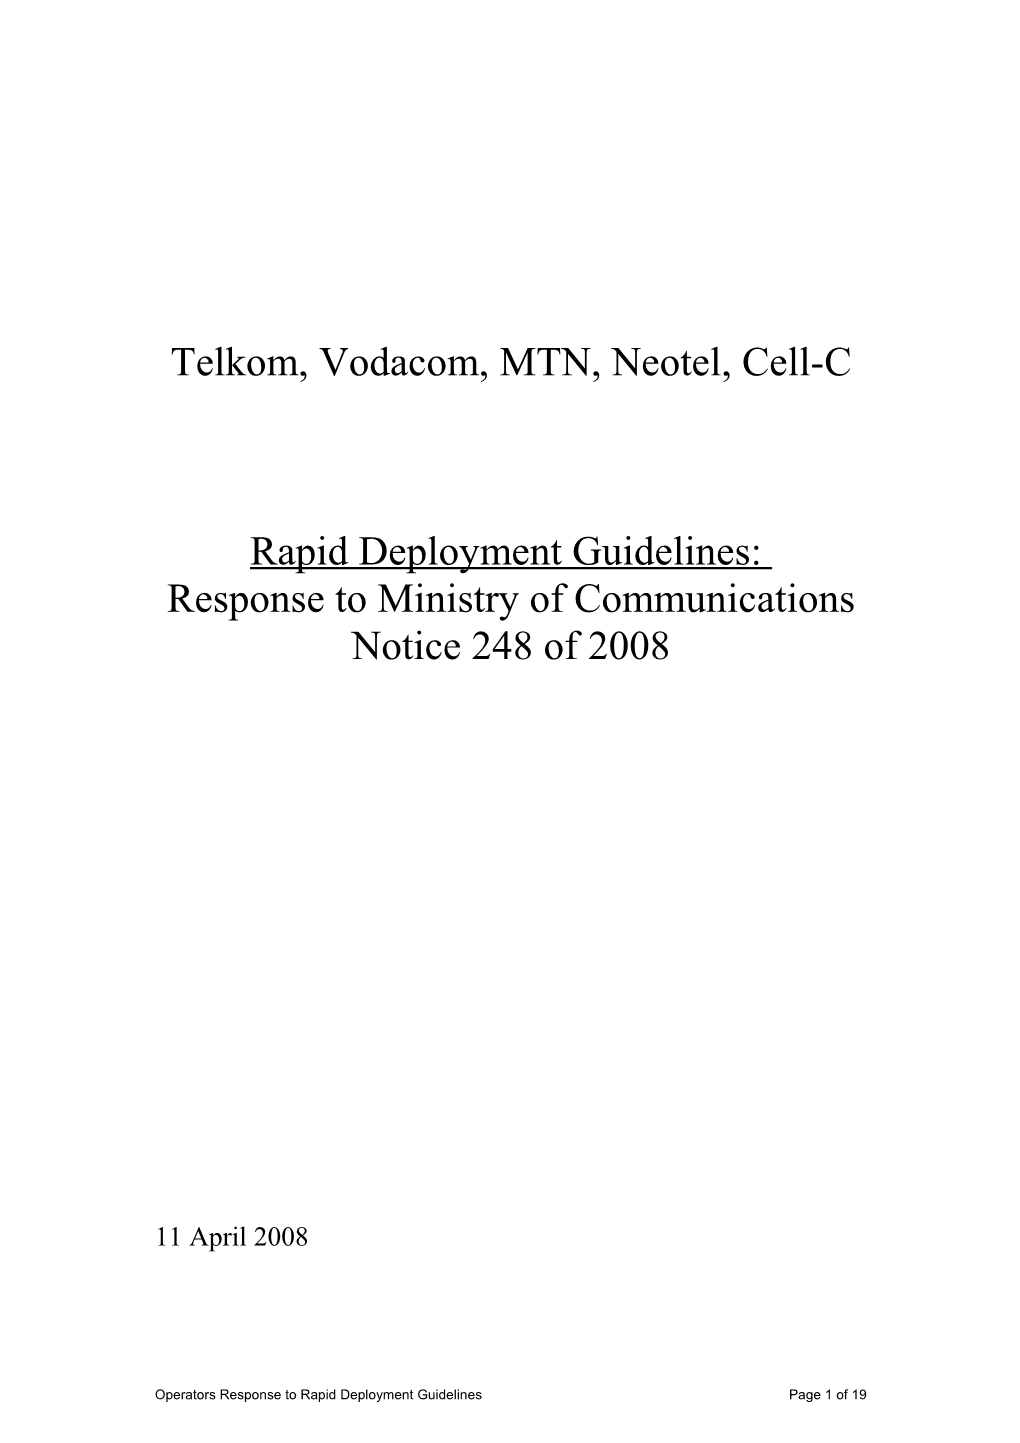 Telkom, Vodacom, MTN, Neotel, Cell-C Rapid Deployment Guidelines